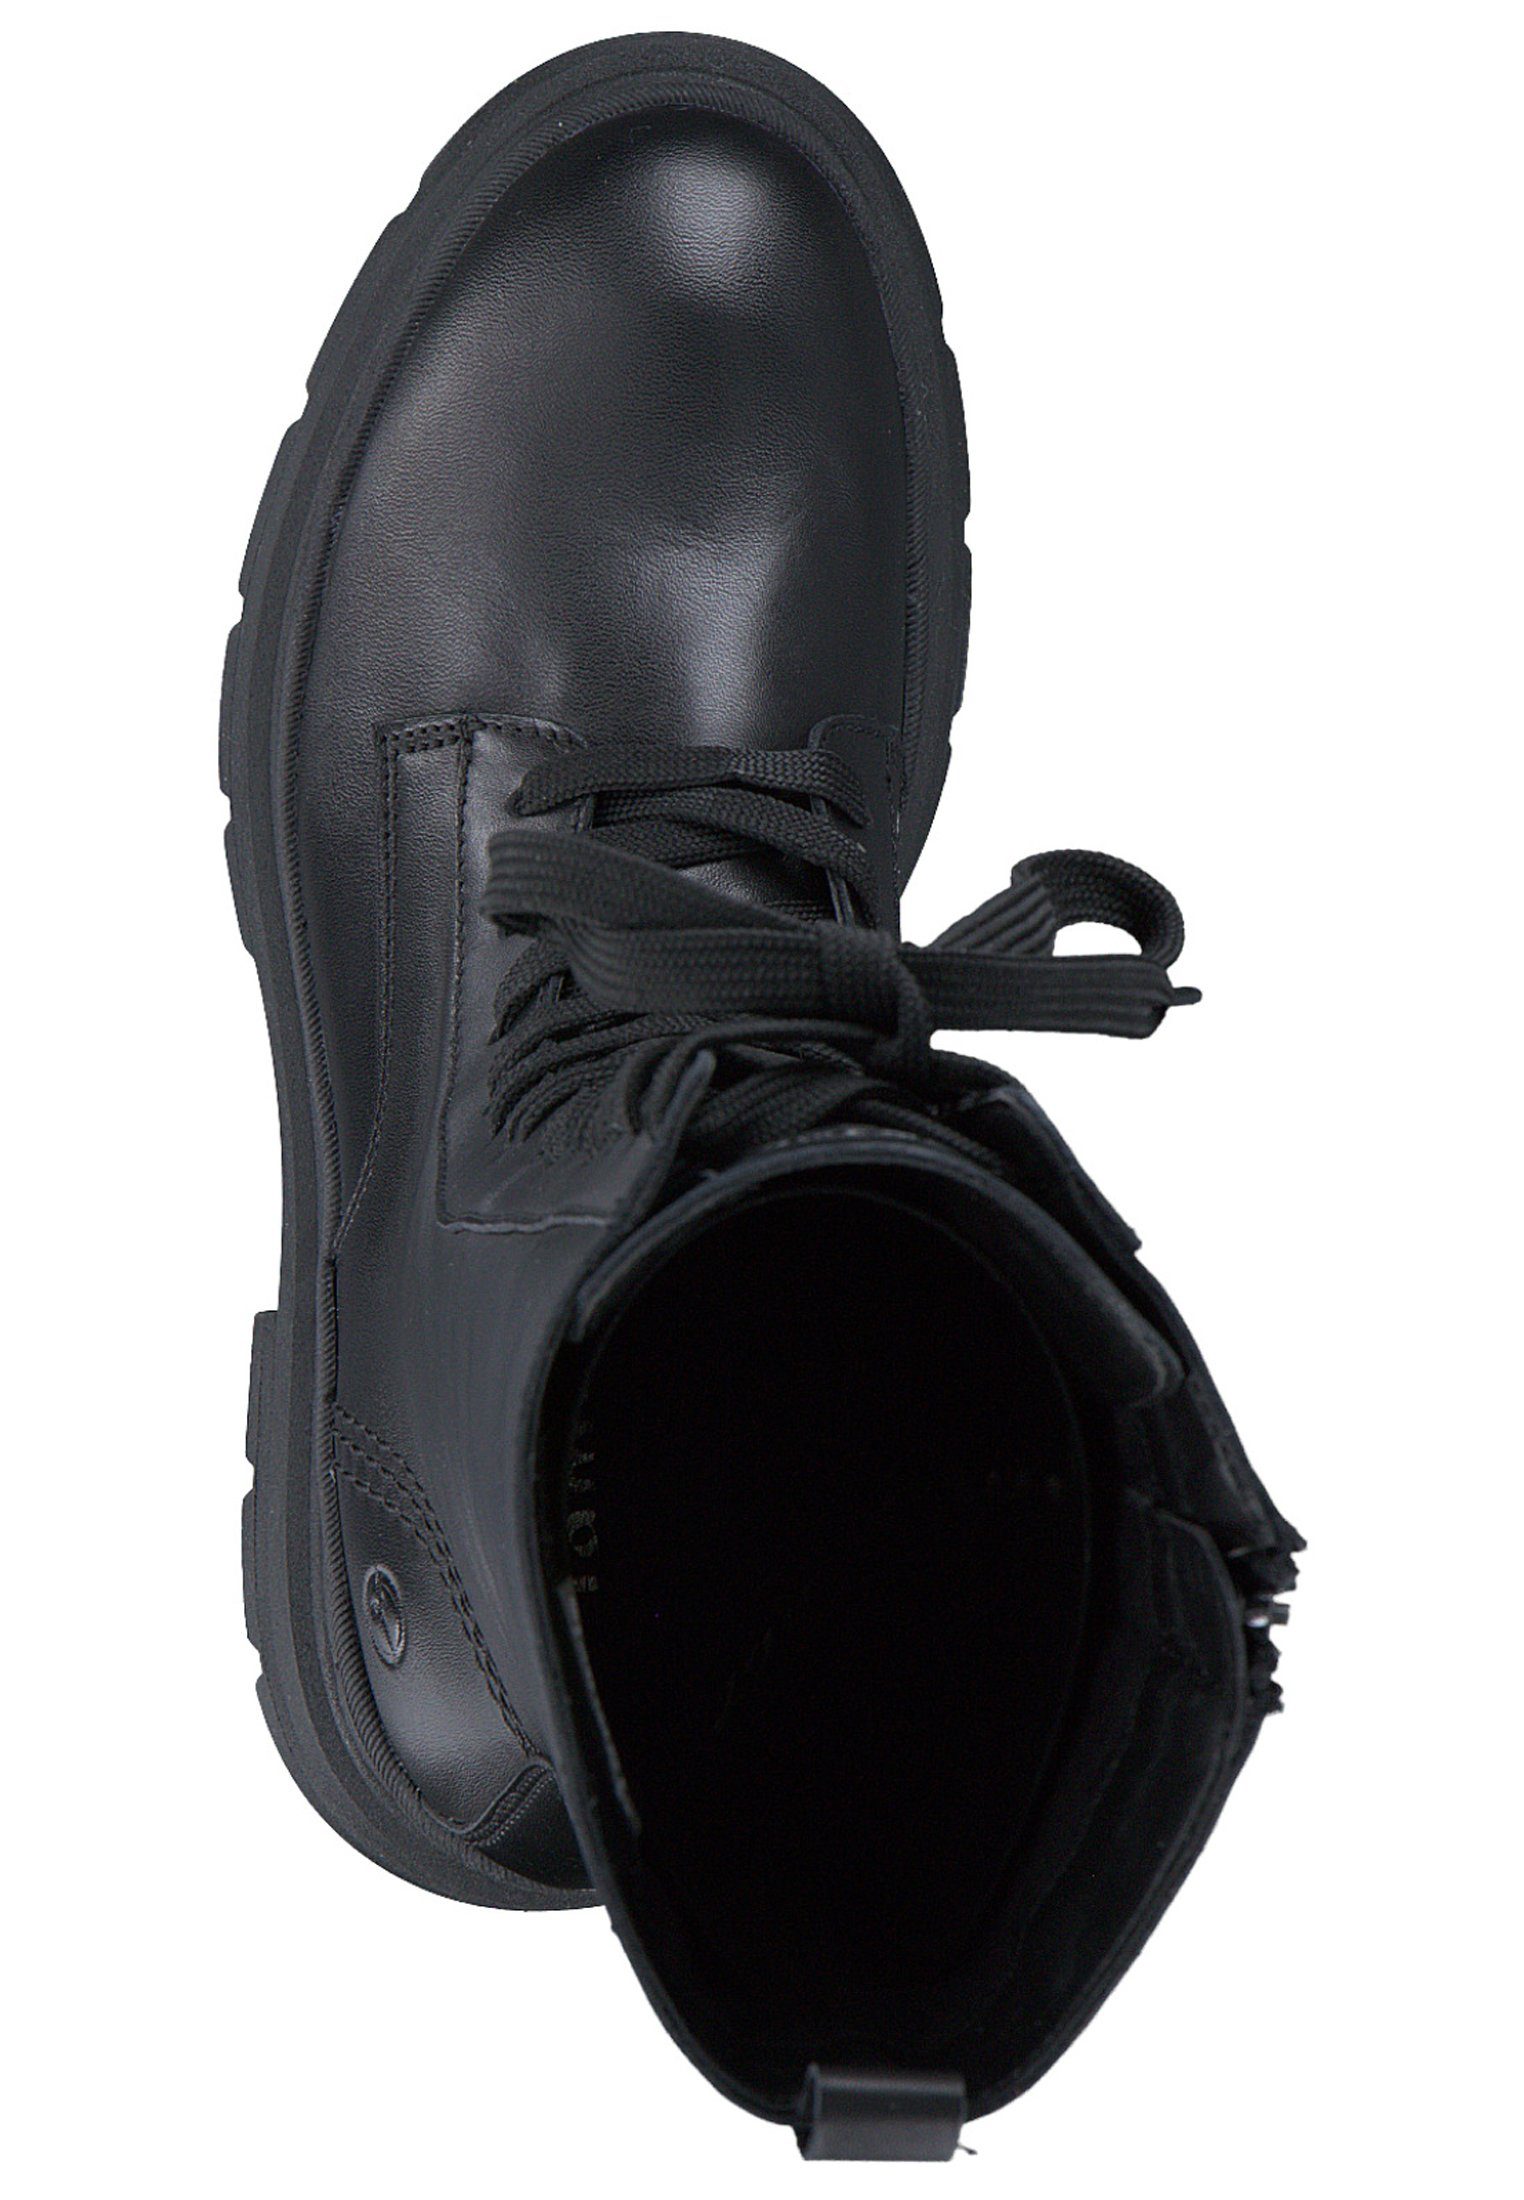 Leather (BLACK Black LEATHER) 1-25212-29 Stiefel Tamaris Schwarz 003